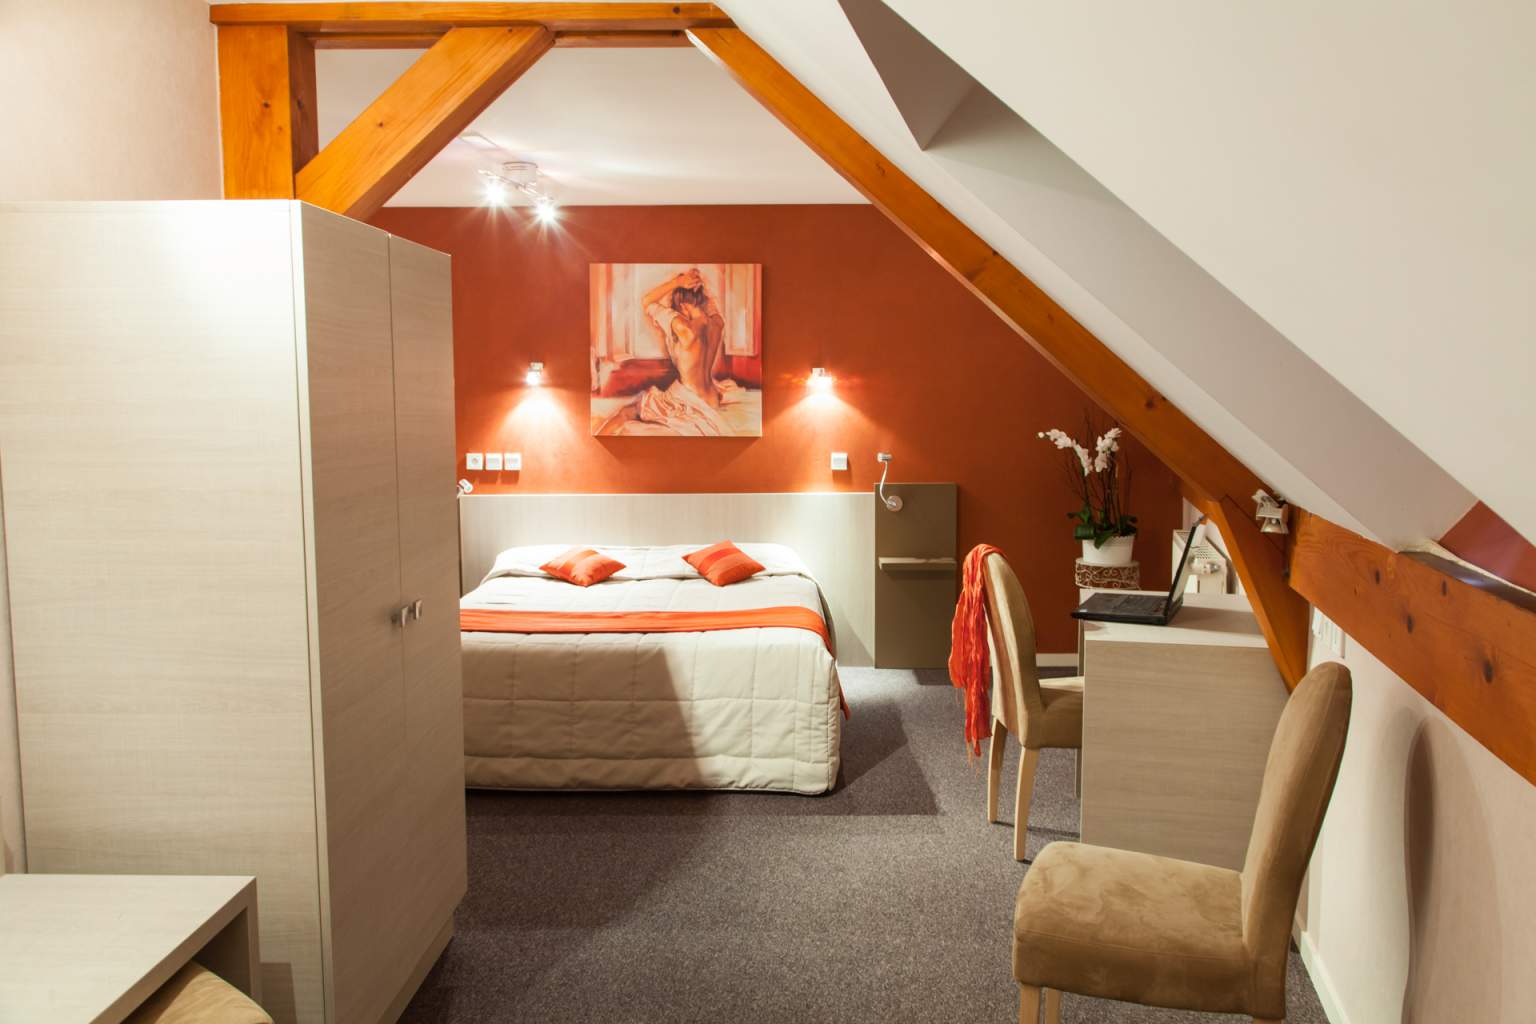 Familiekamer van Hotel Restaurant Le Bourguignon bij België, Nederland en Engeland